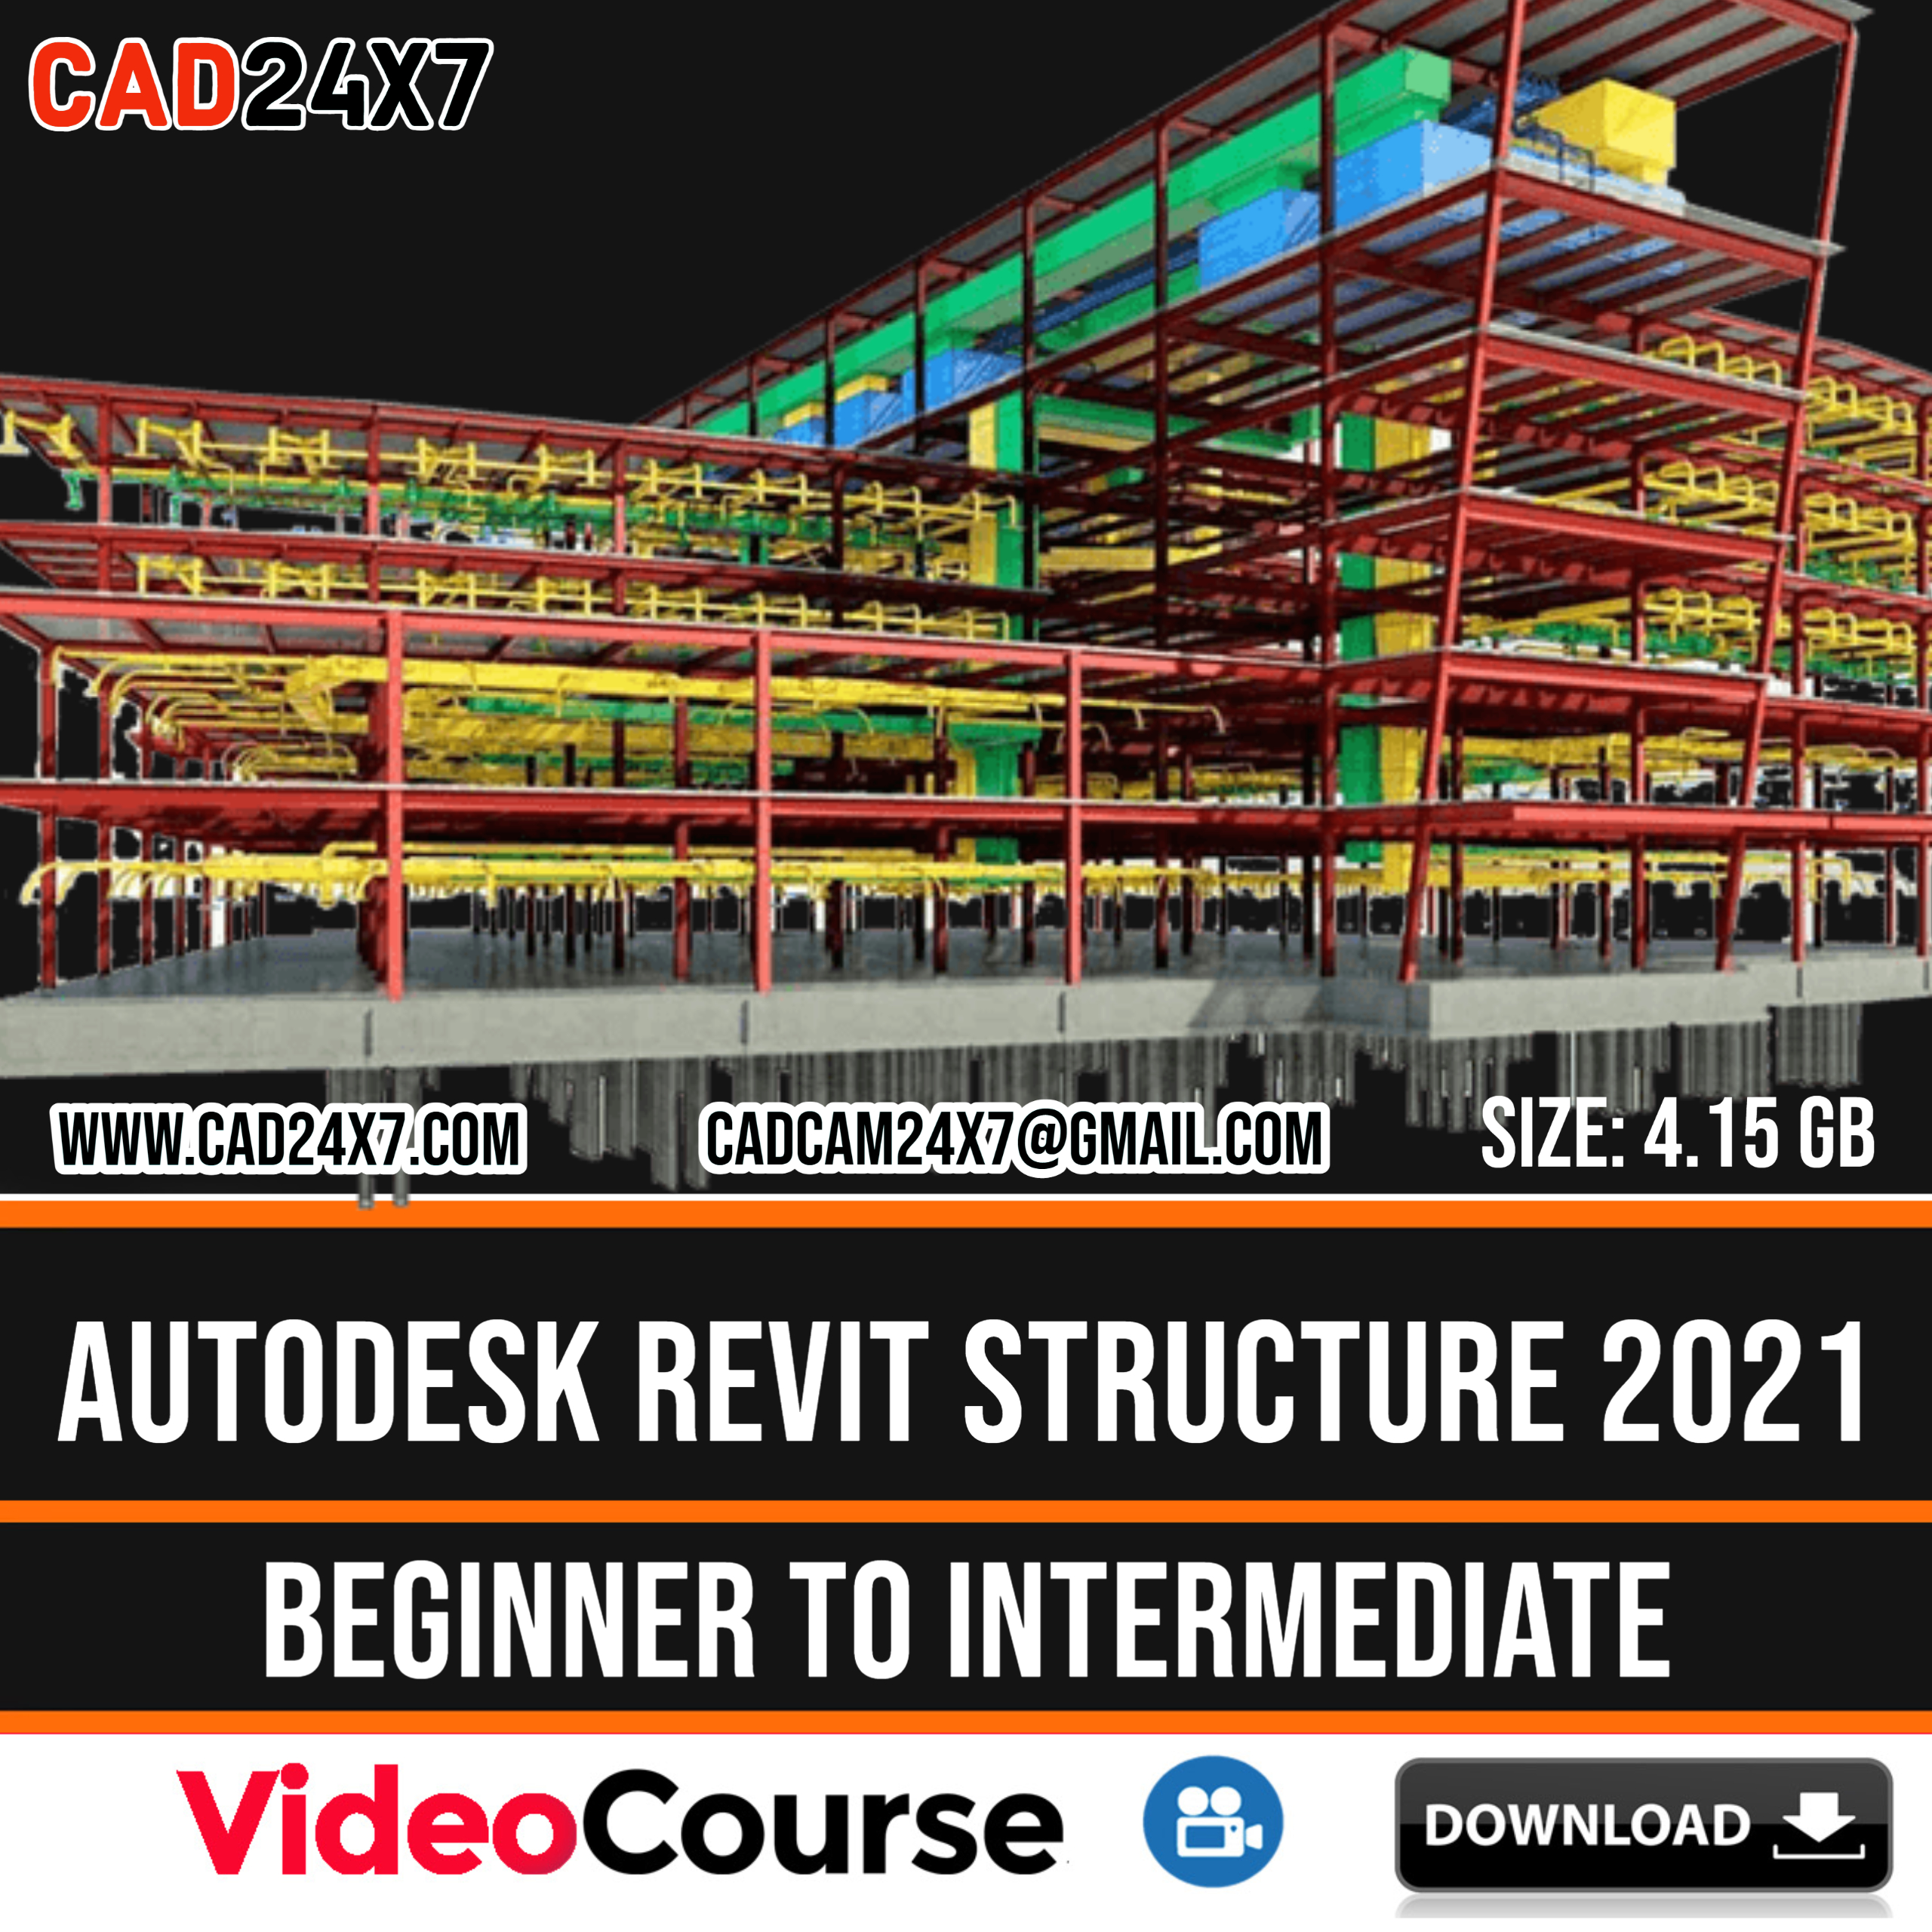 Autodesk Revit Structure 2021 Beginner to Intermediate